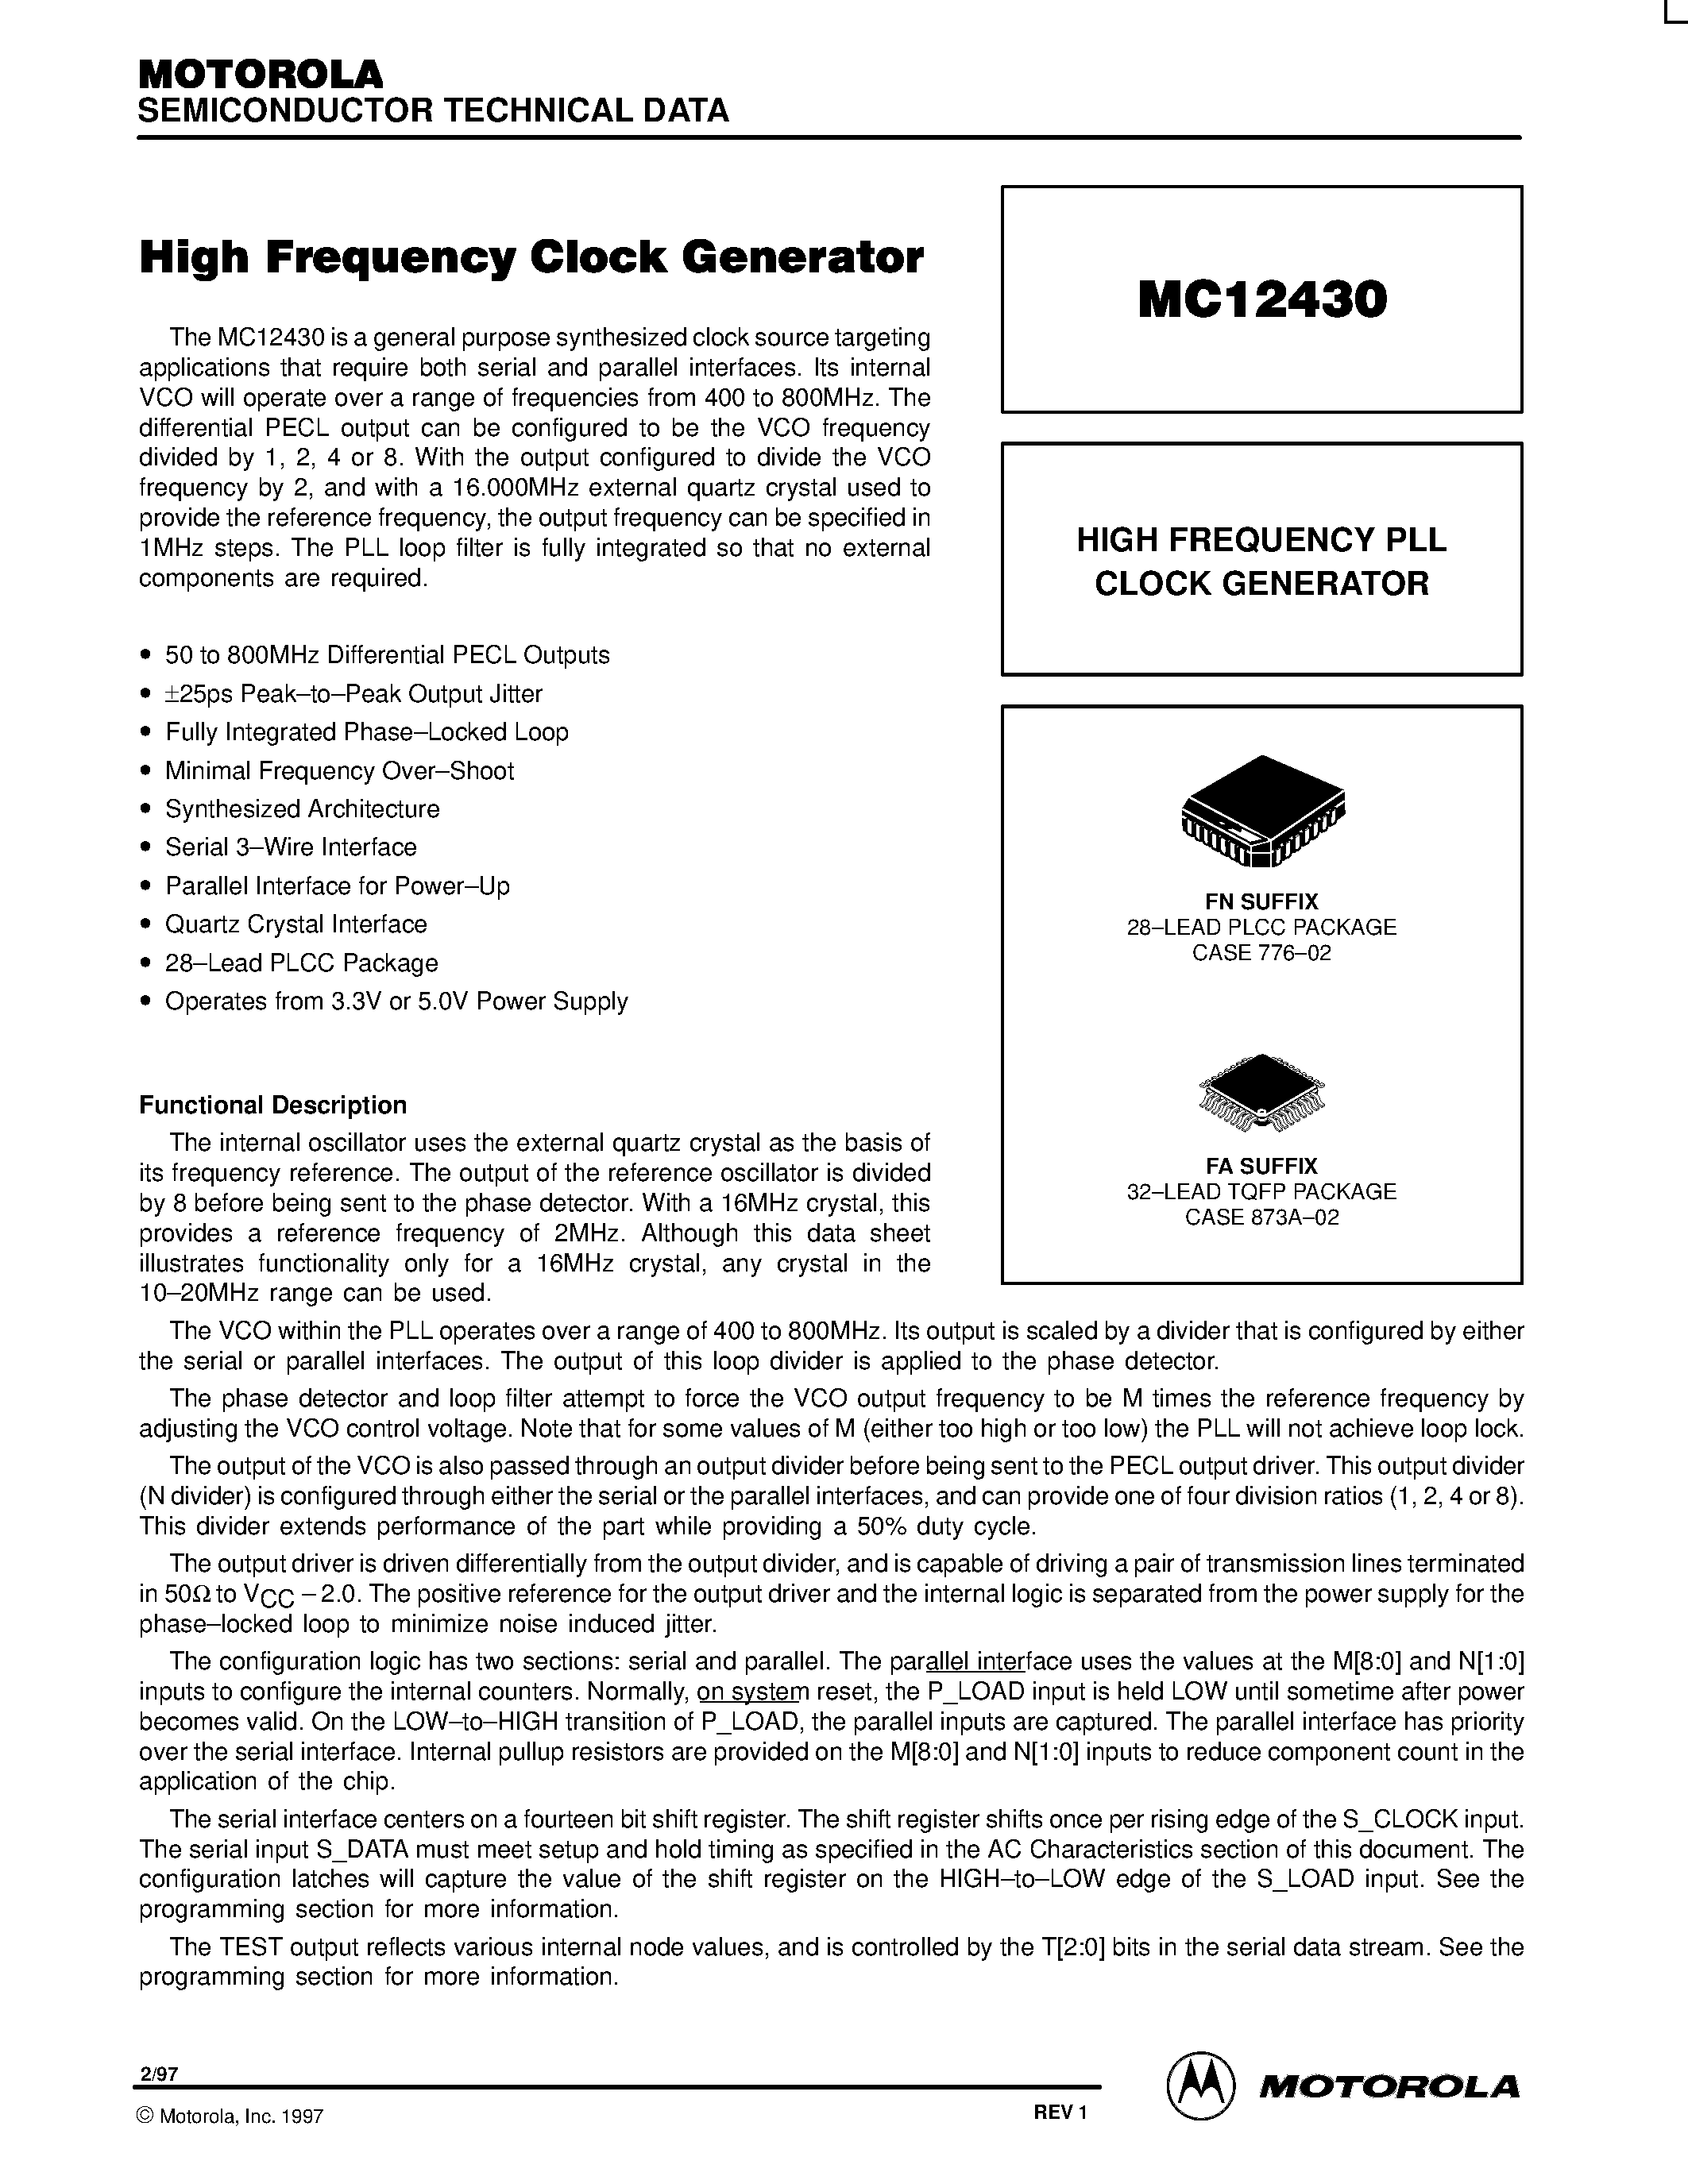 Datasheet MC12430FA - HIGH FREQUENCY PLL CLOCK GENERATOR page 1